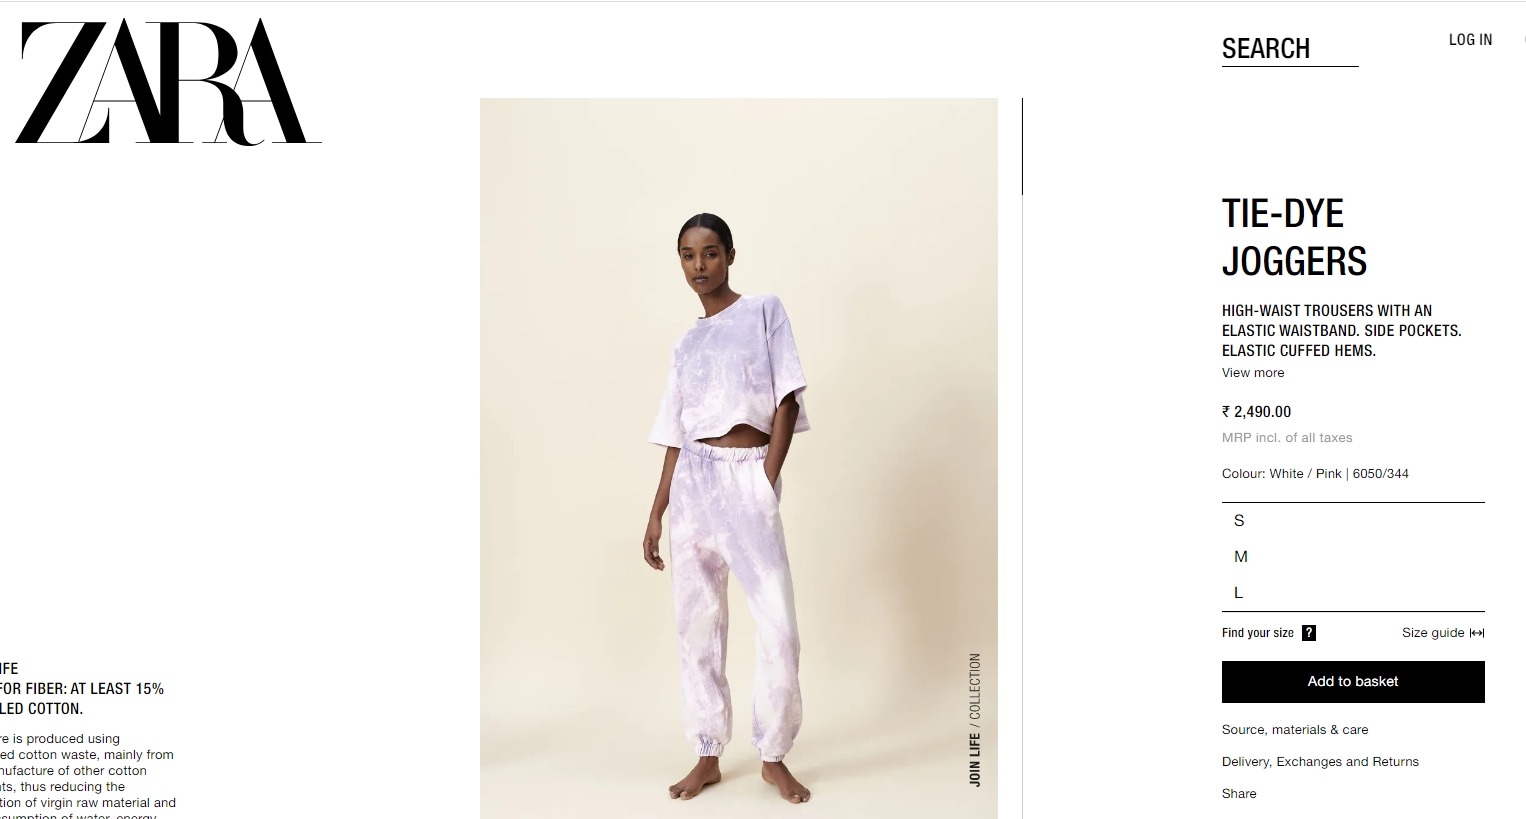 The sweatpants are worth ₹2,490(Zara.com)